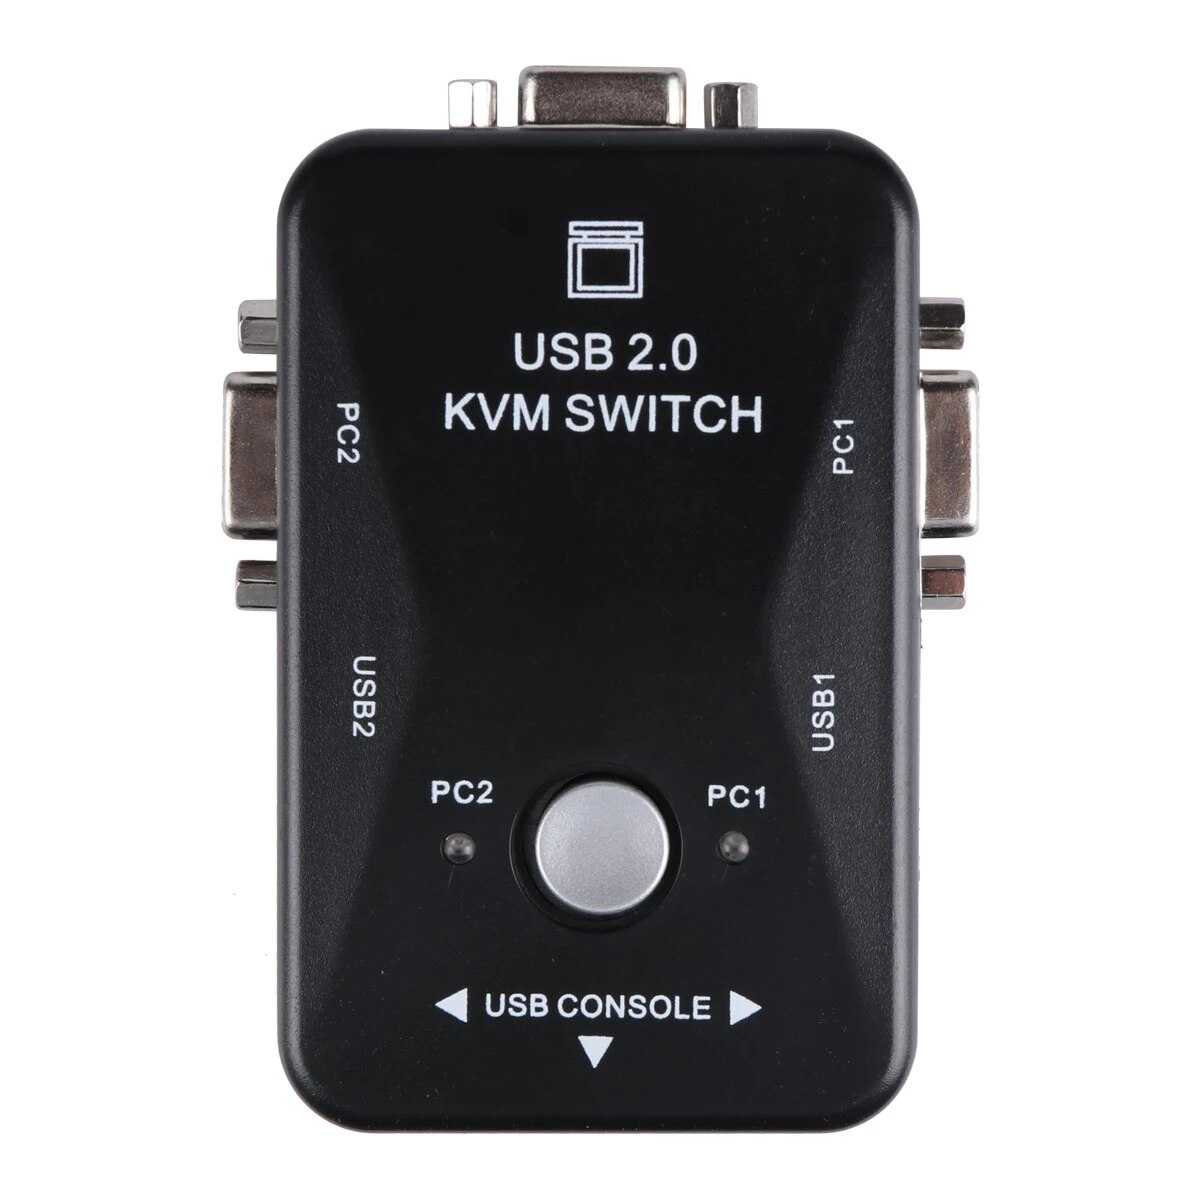 Usb 2.0 Kvm Switch 2 Port 920*1440 Vga Svga Switch Splitter Box Voor Toetsenbord Muis Monitor Computer Adapter usb Printer Switch